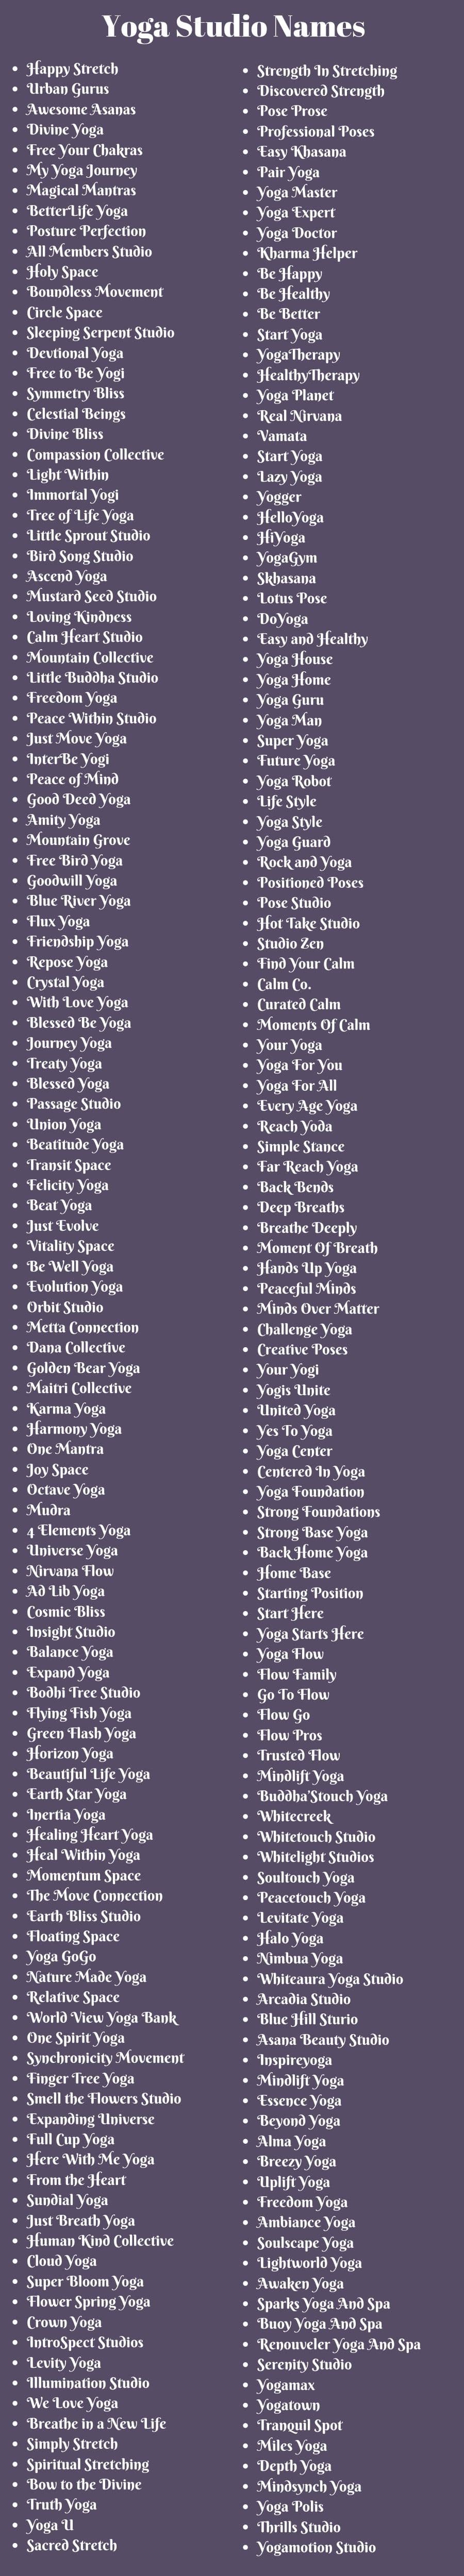 Yoga Studio Names: 200+ Hot Yoga and Meditation Name Ideas